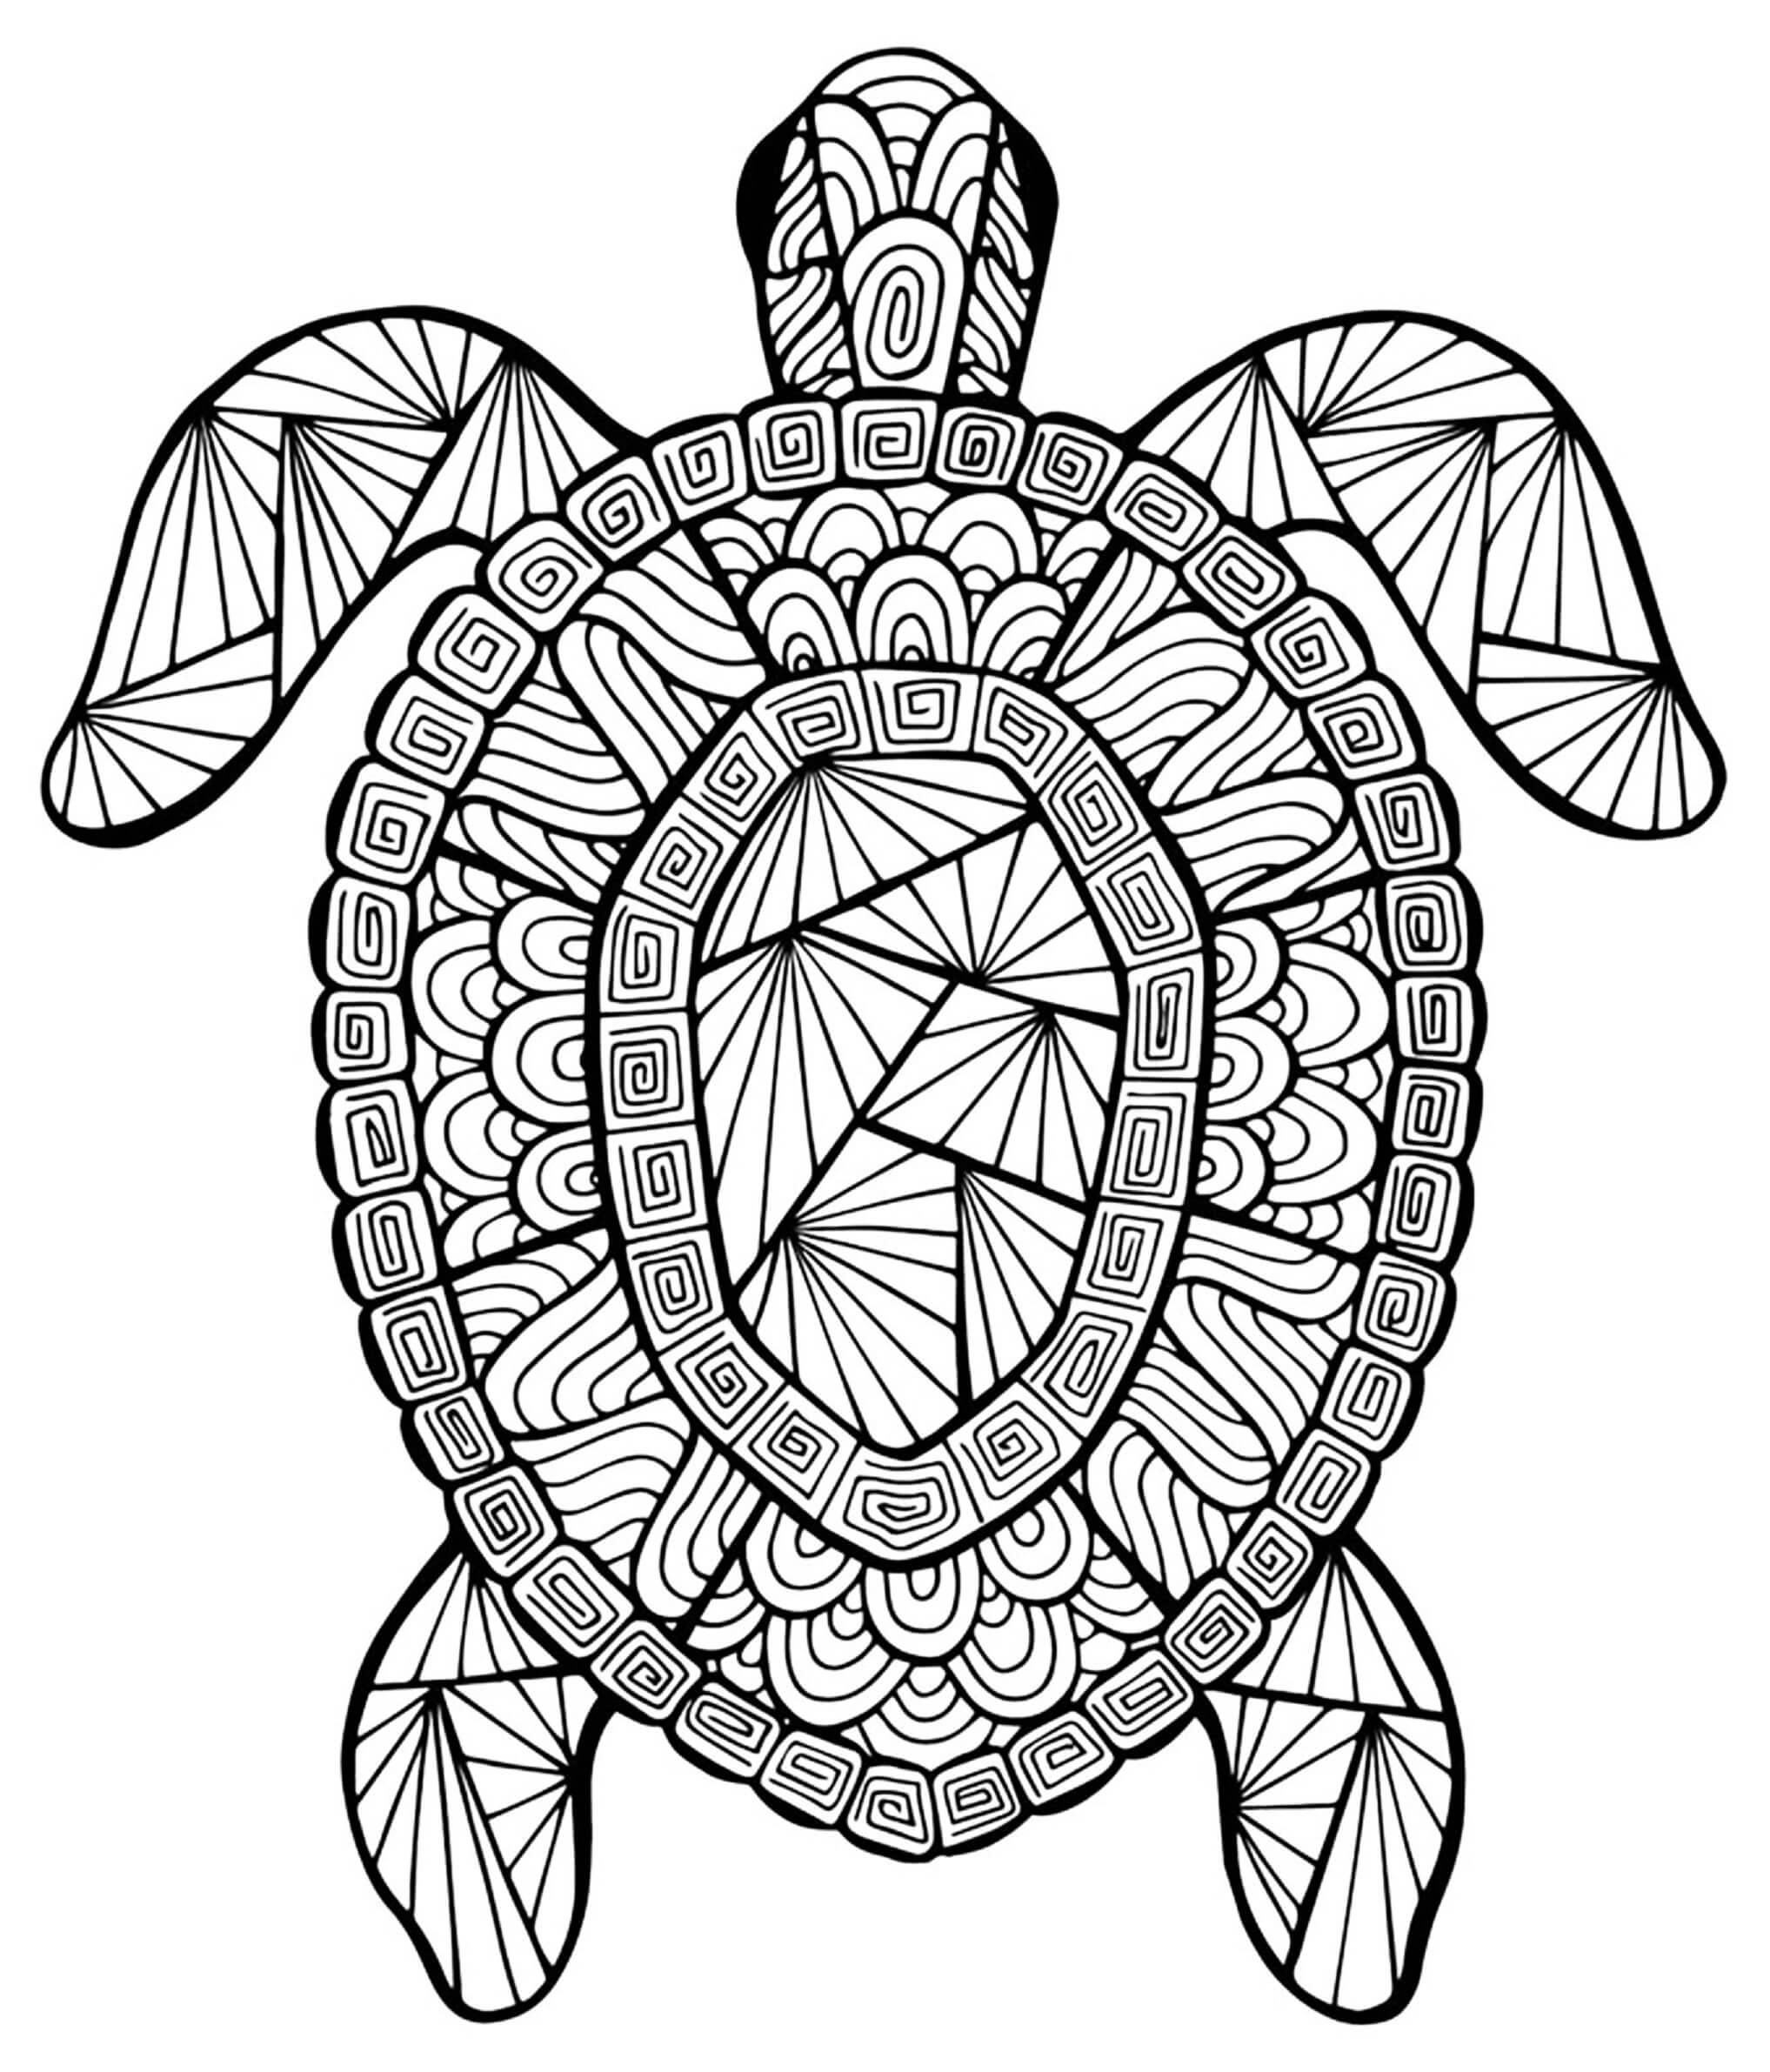 Mandala Turtle Coloring Page - Sheet 3 Mandalas